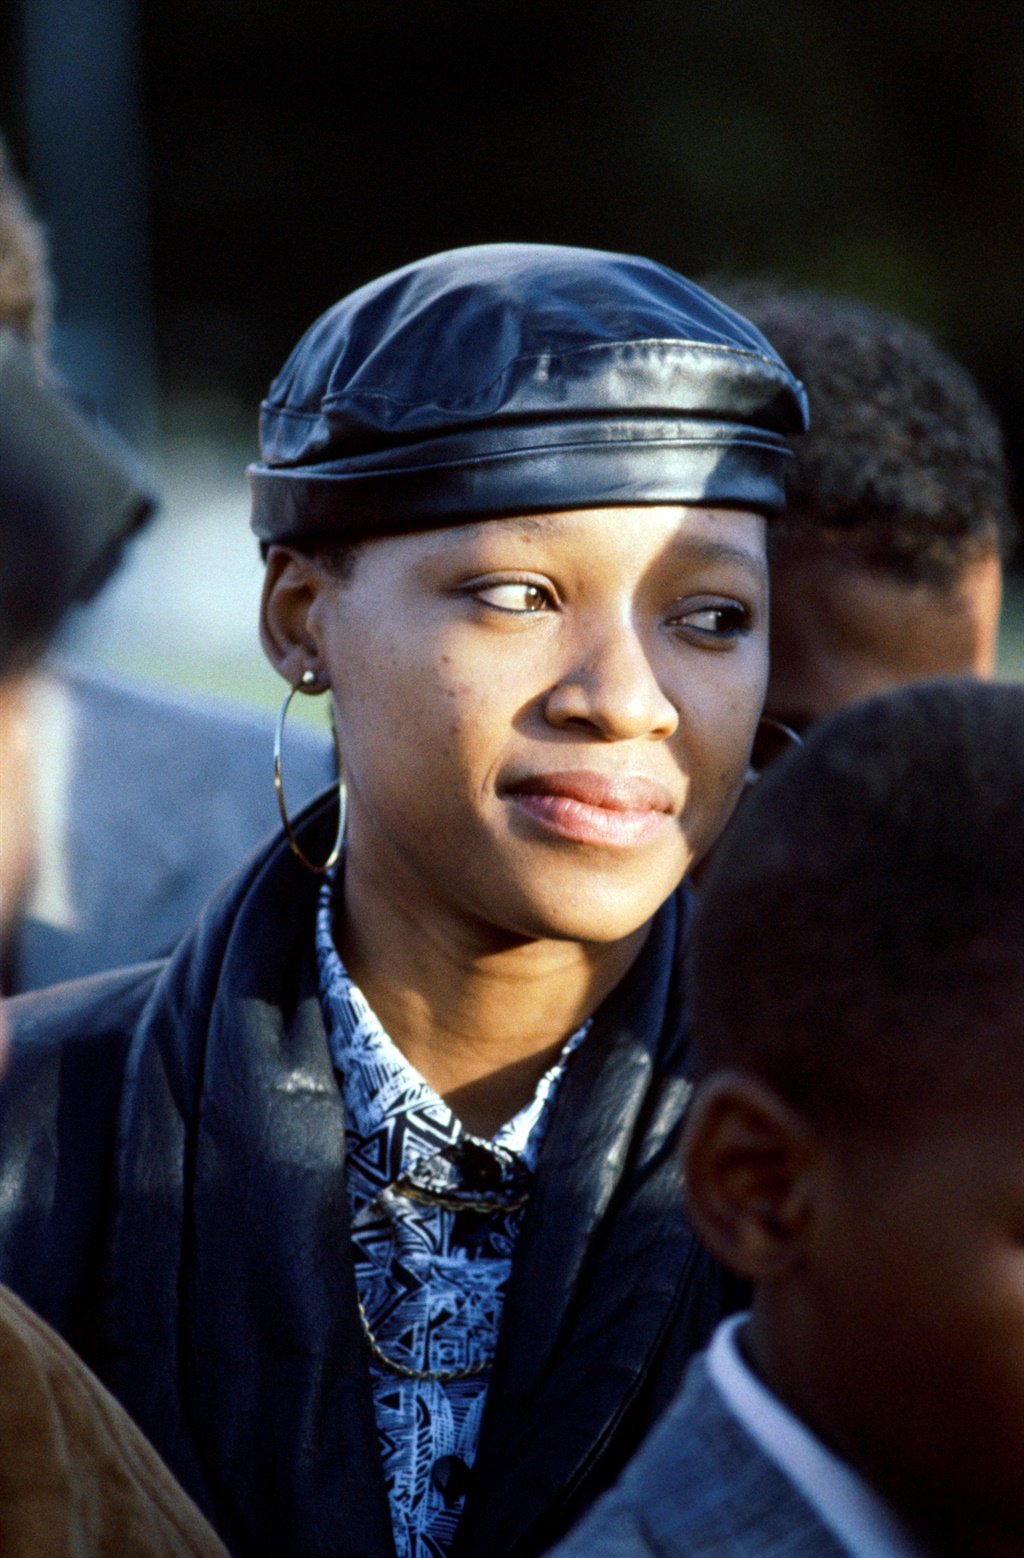 Zindzi Mandela after visiting her father, Nelson M